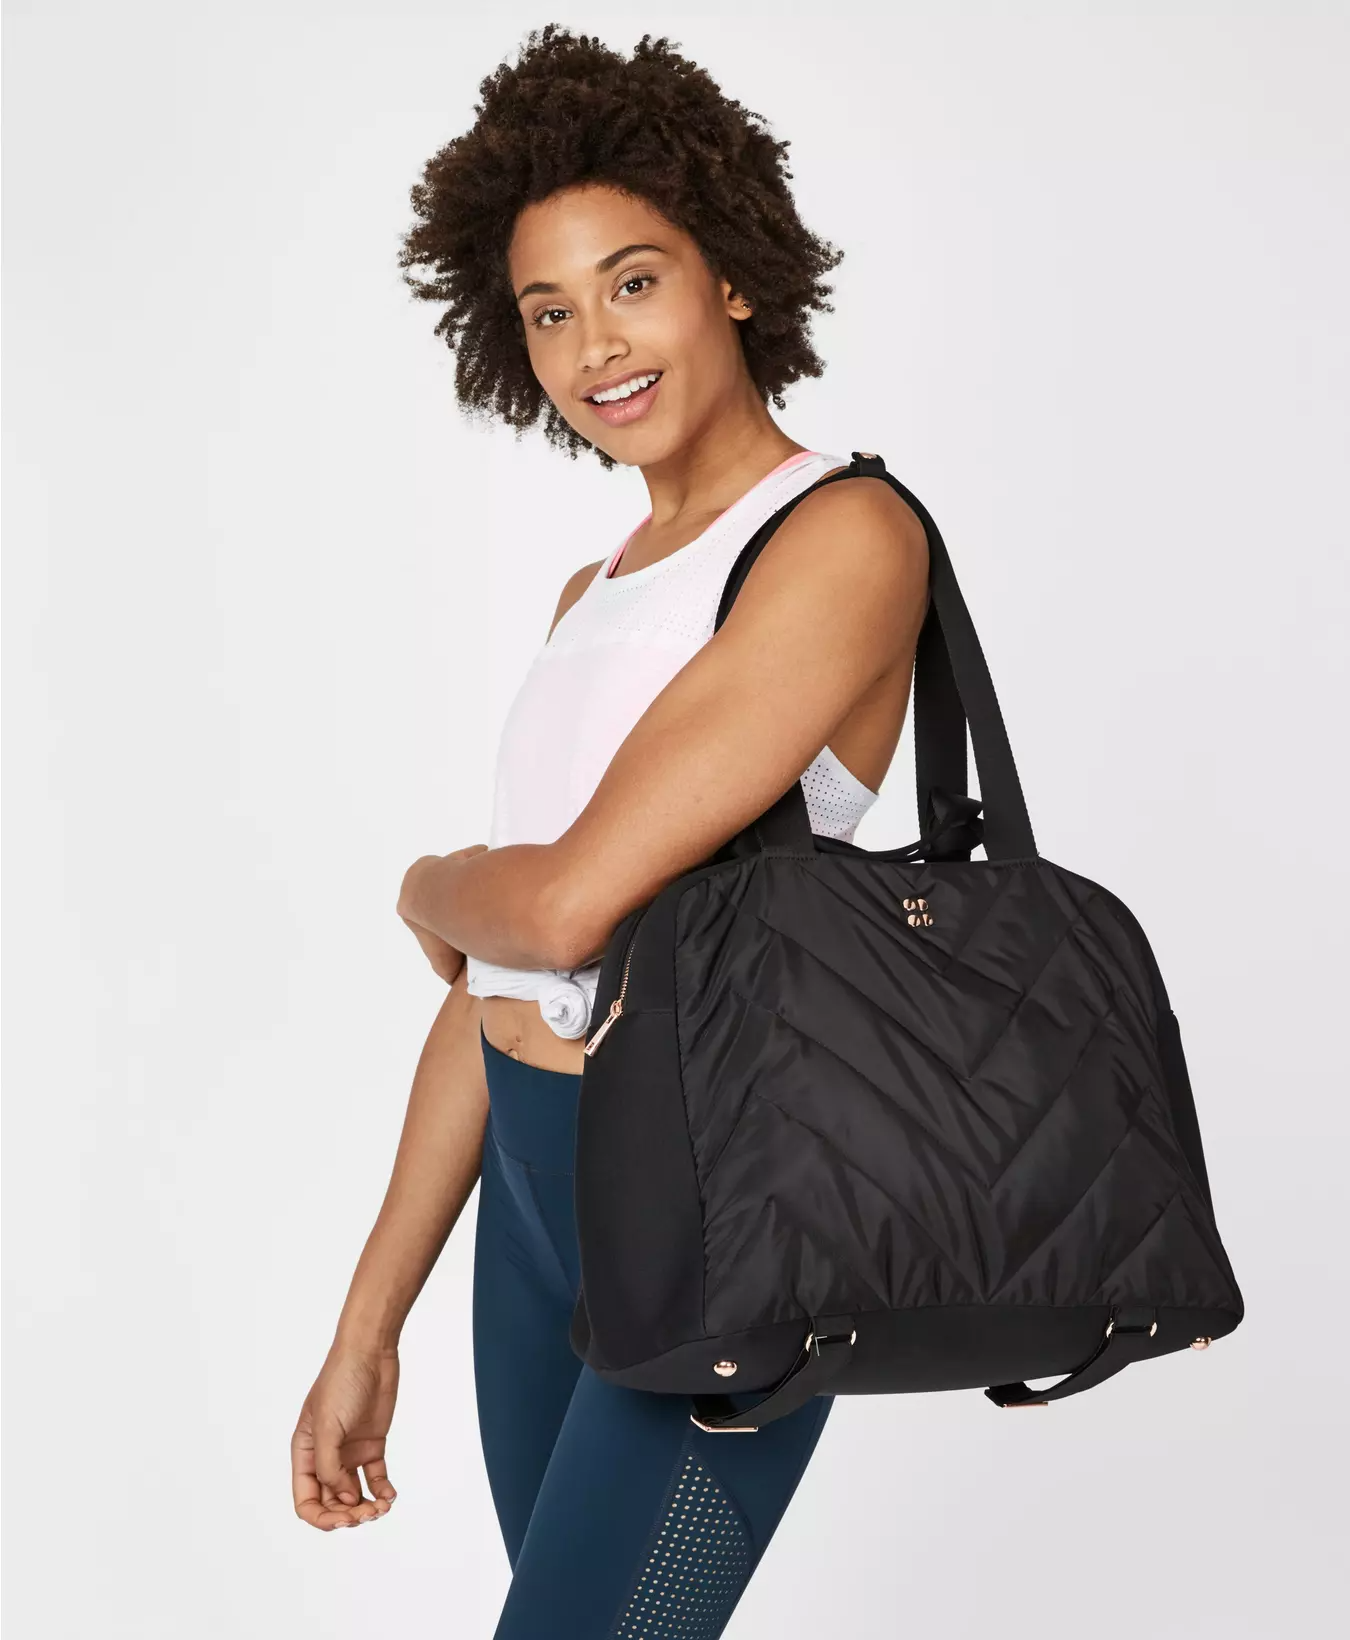 Icon Gym Bag - black, Women's Bags